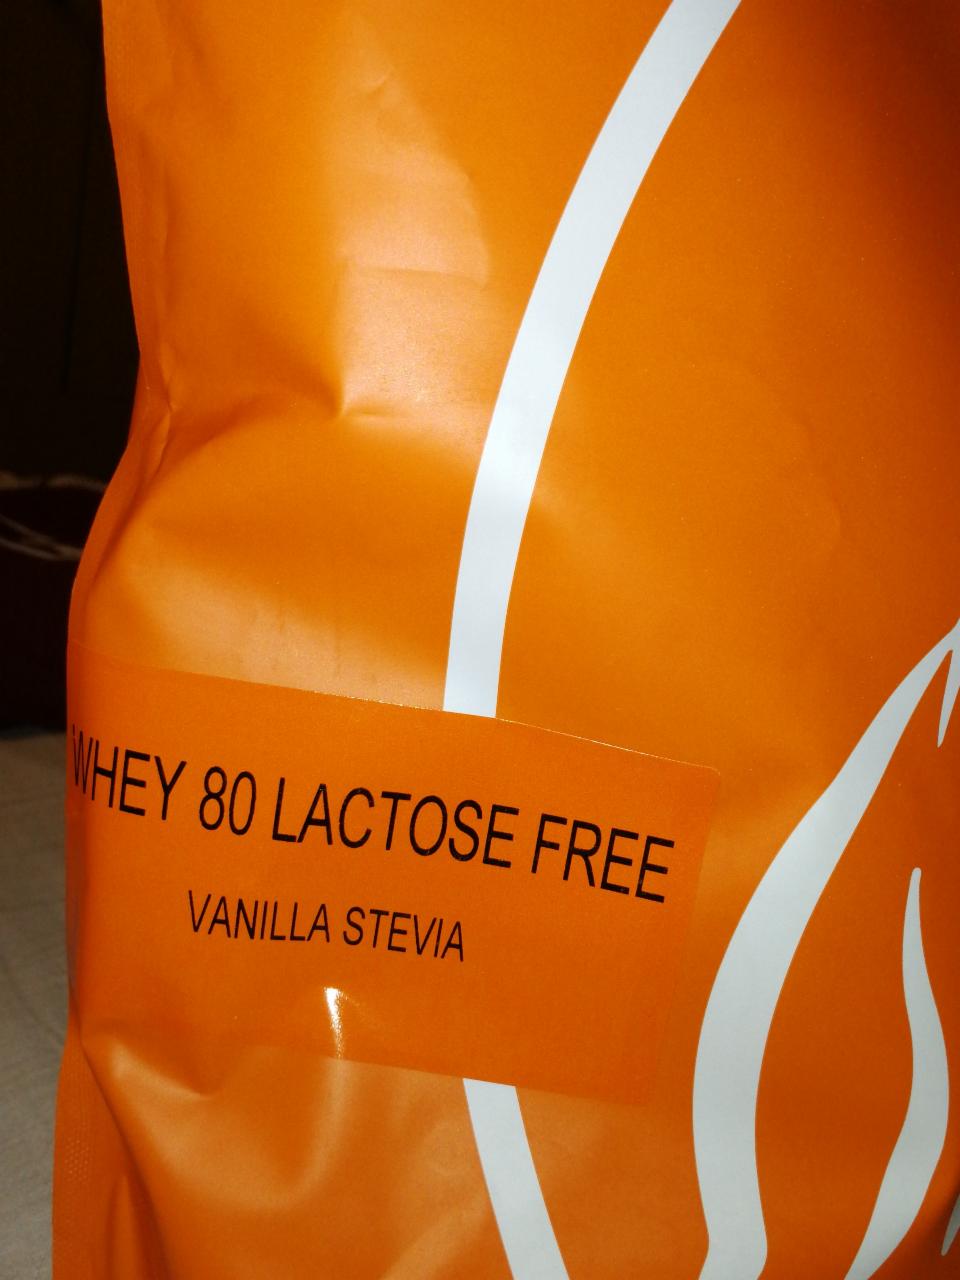 Fotografie - Whey 80 lactose free vanilla stevia StillMass